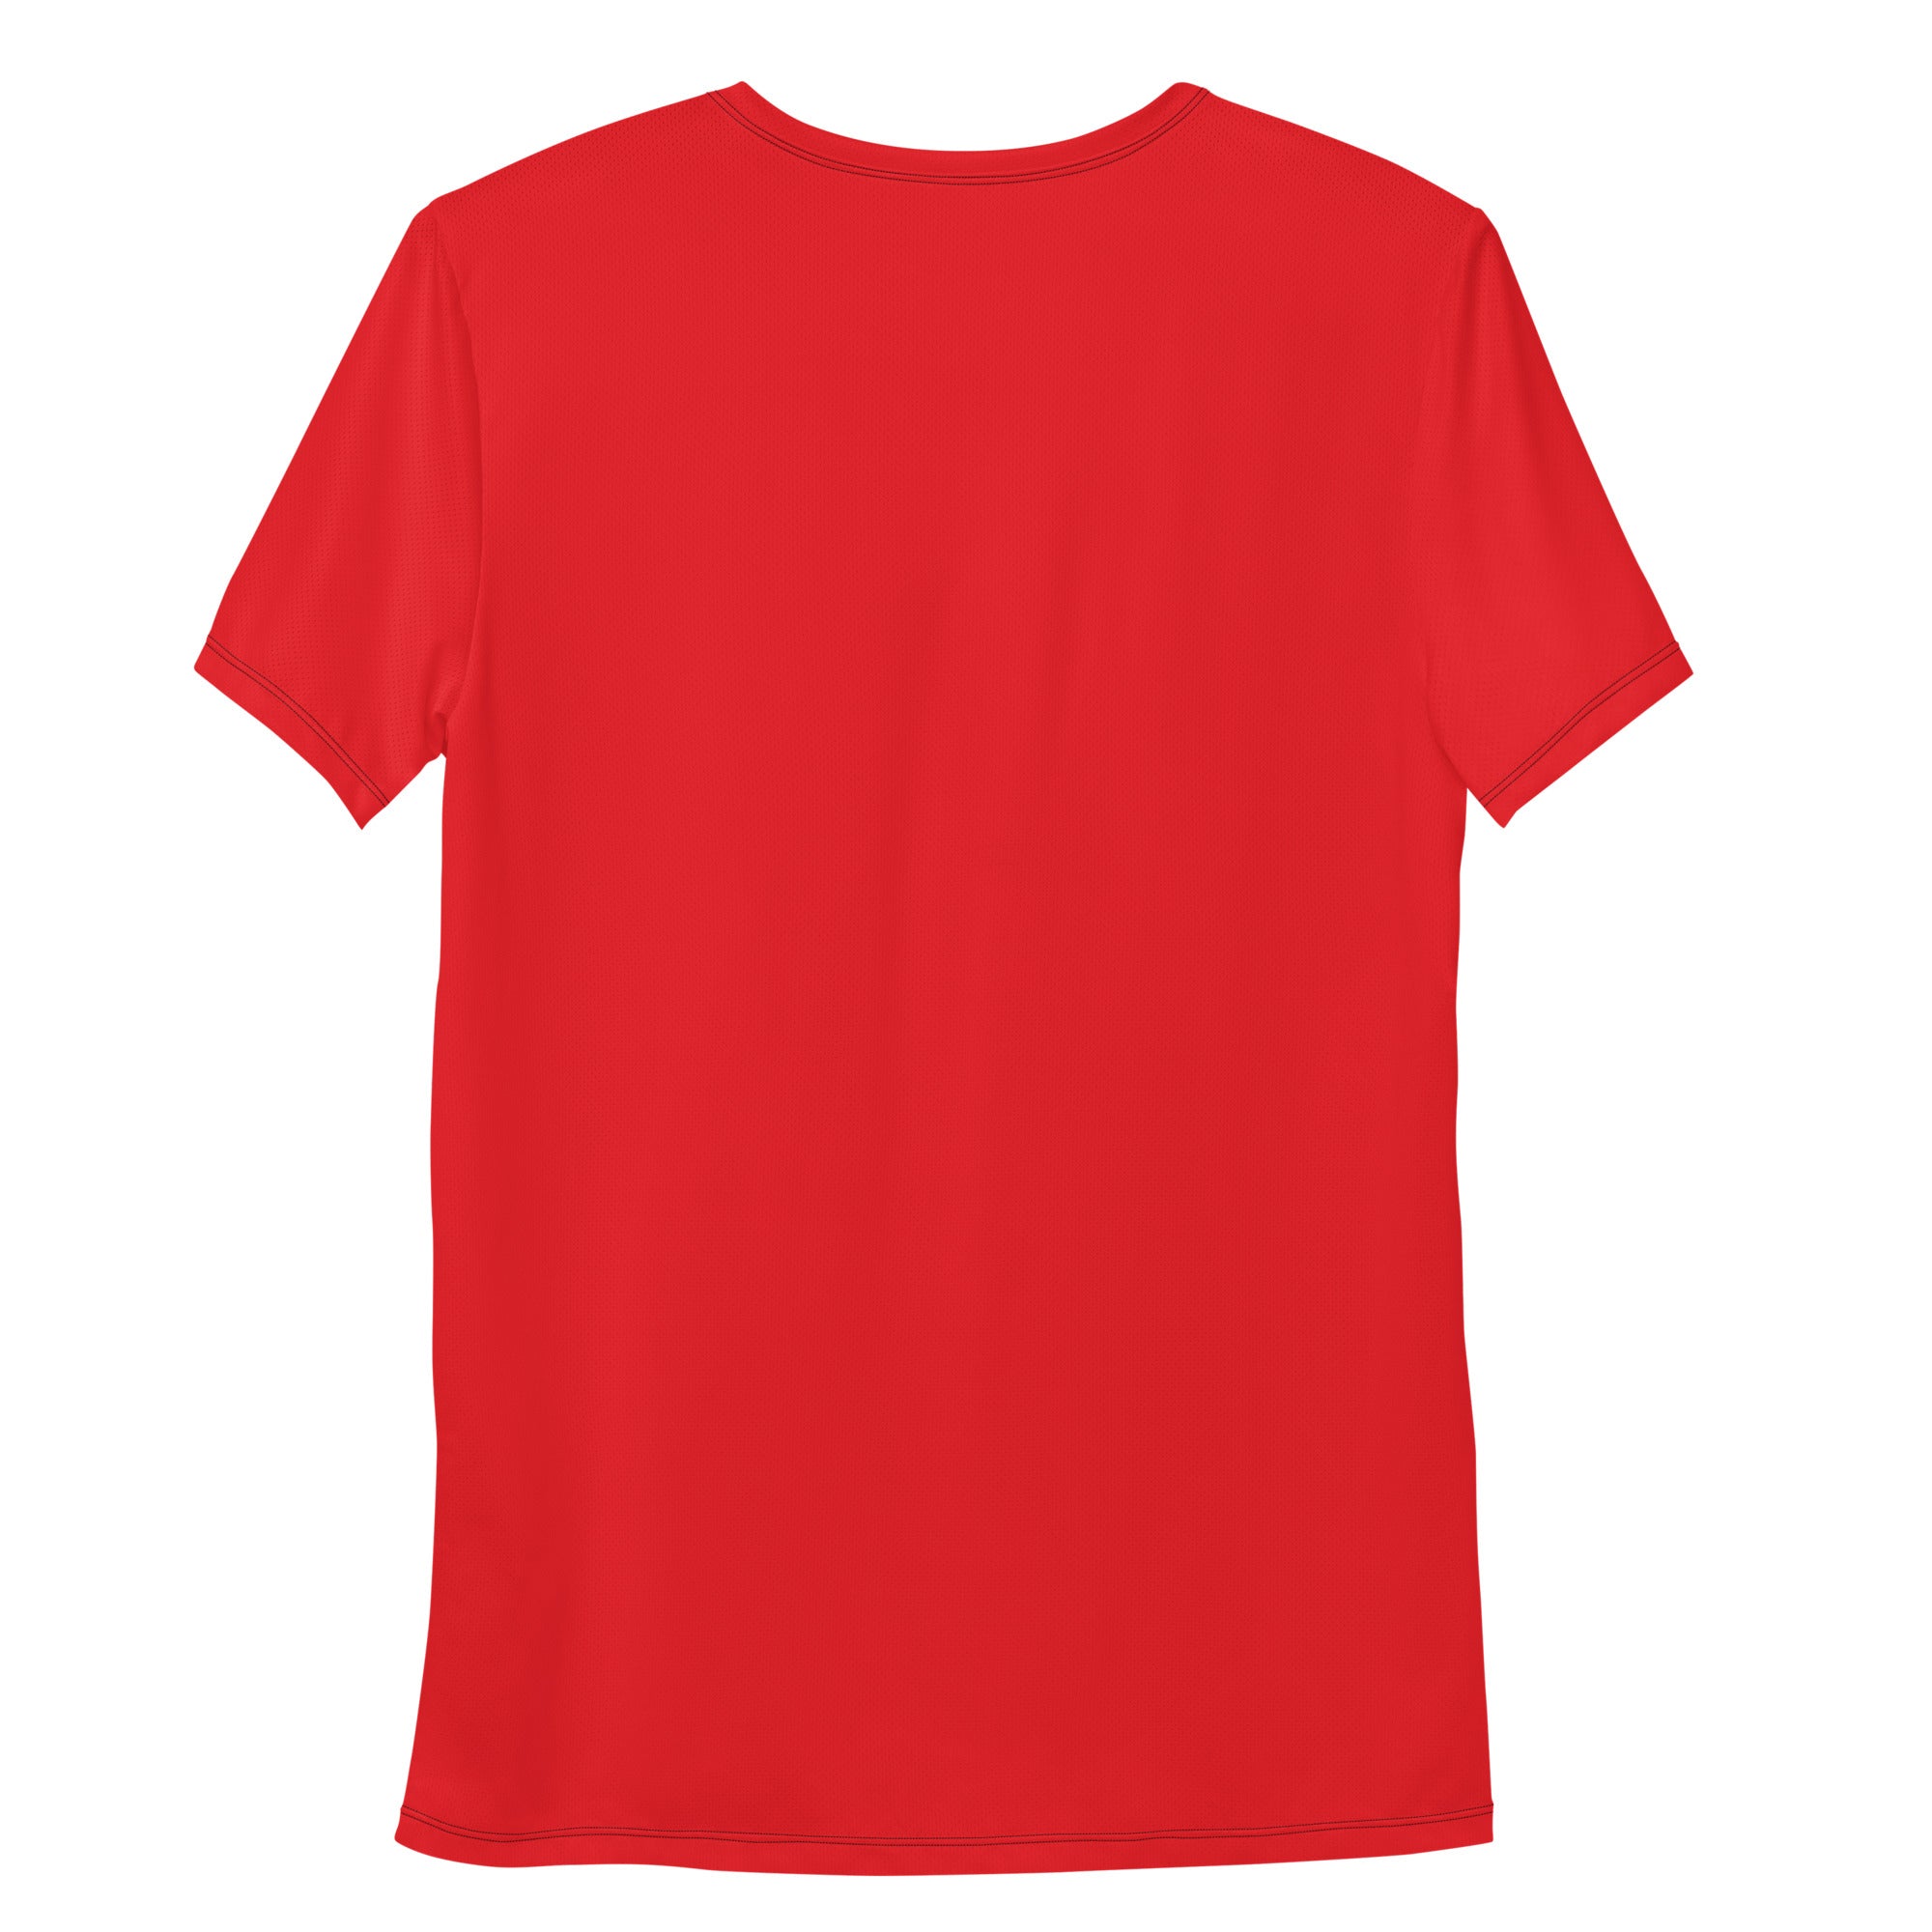 PPA Performance Short Sleeve Men's Athletic T-shirt